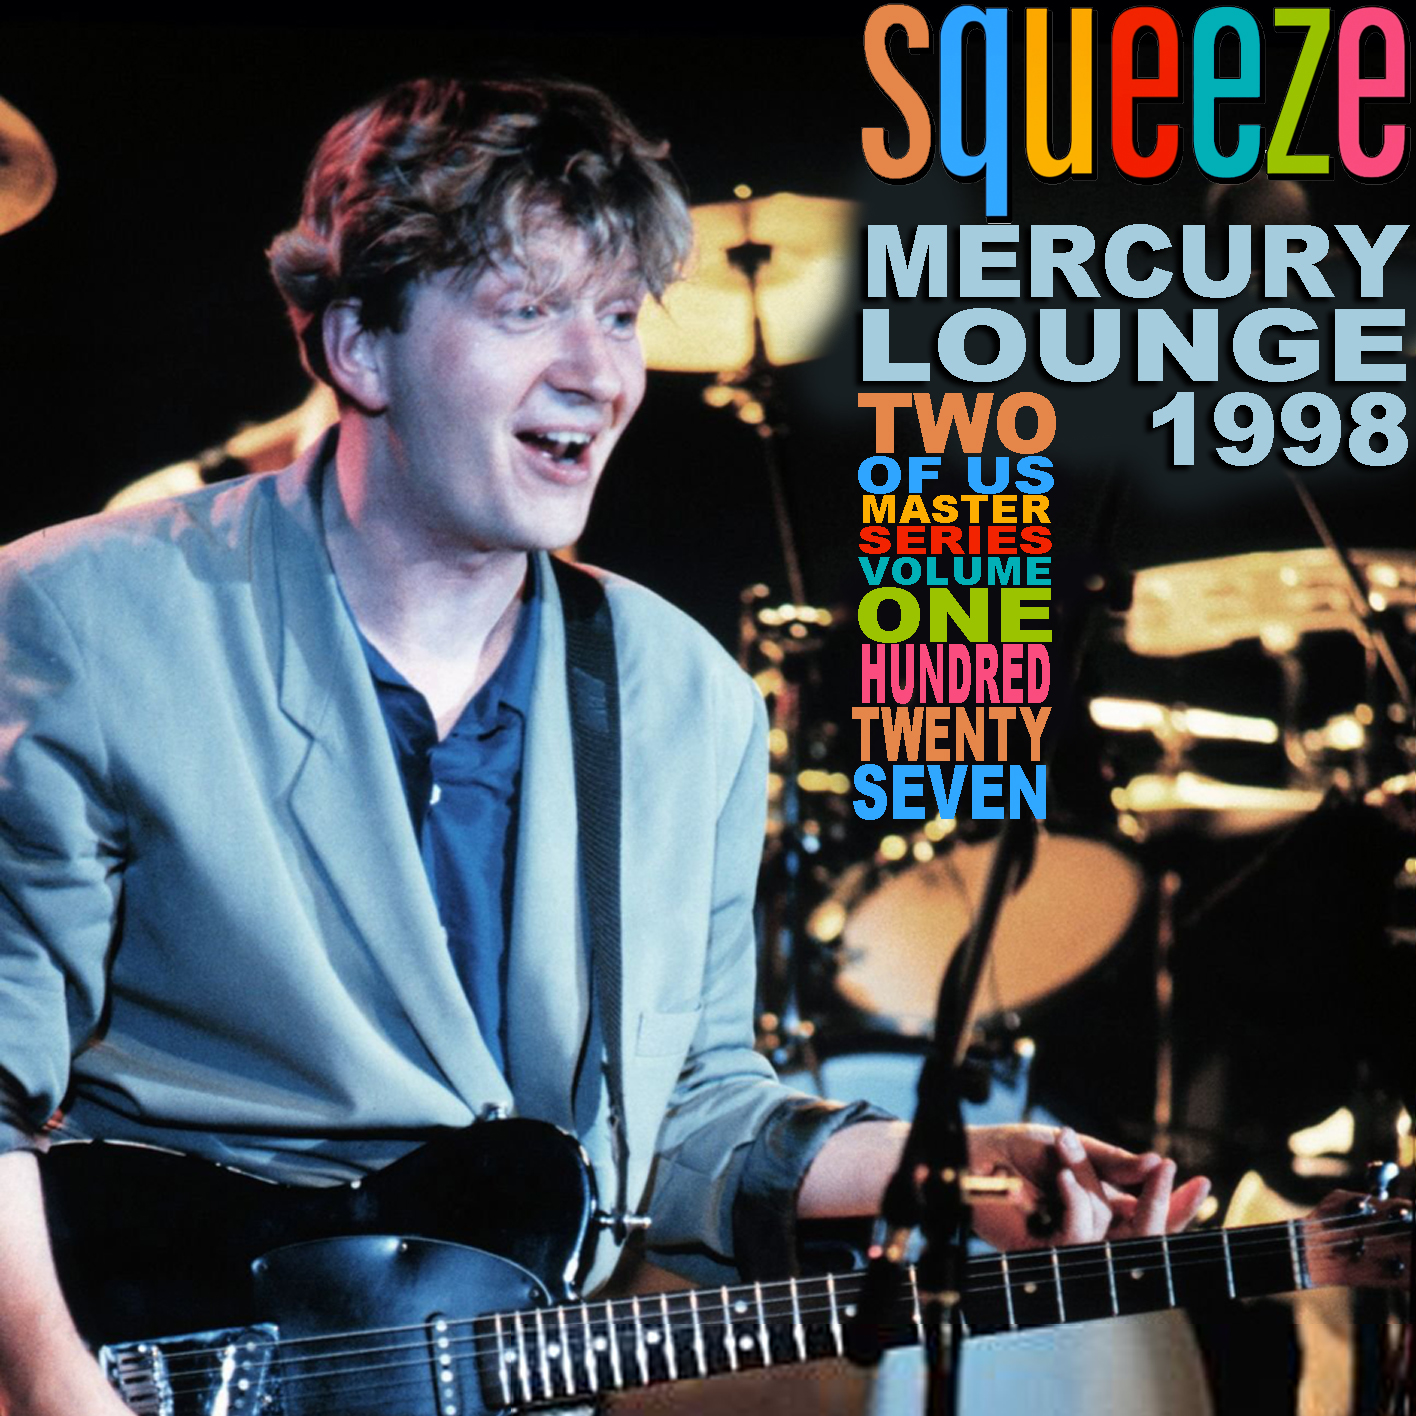 Squeeze1998-06-13MercuryLoungeNYC (1).jpg